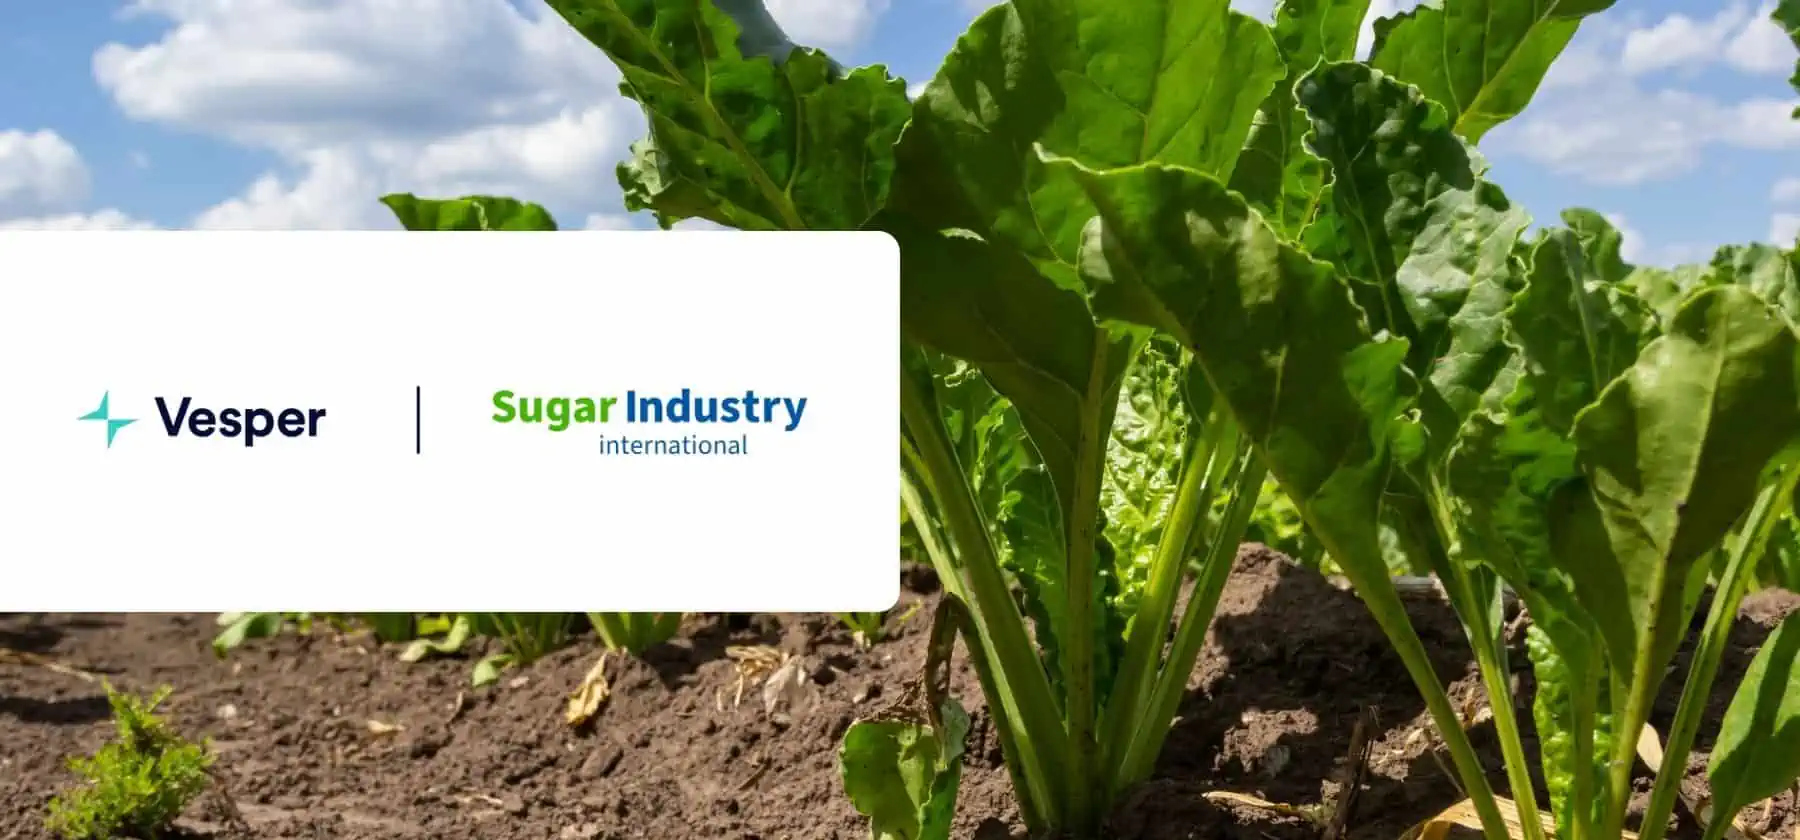 global sugar news: Vesper broadens its global sugar news coverage through a recent partnership with Sugar Industry International